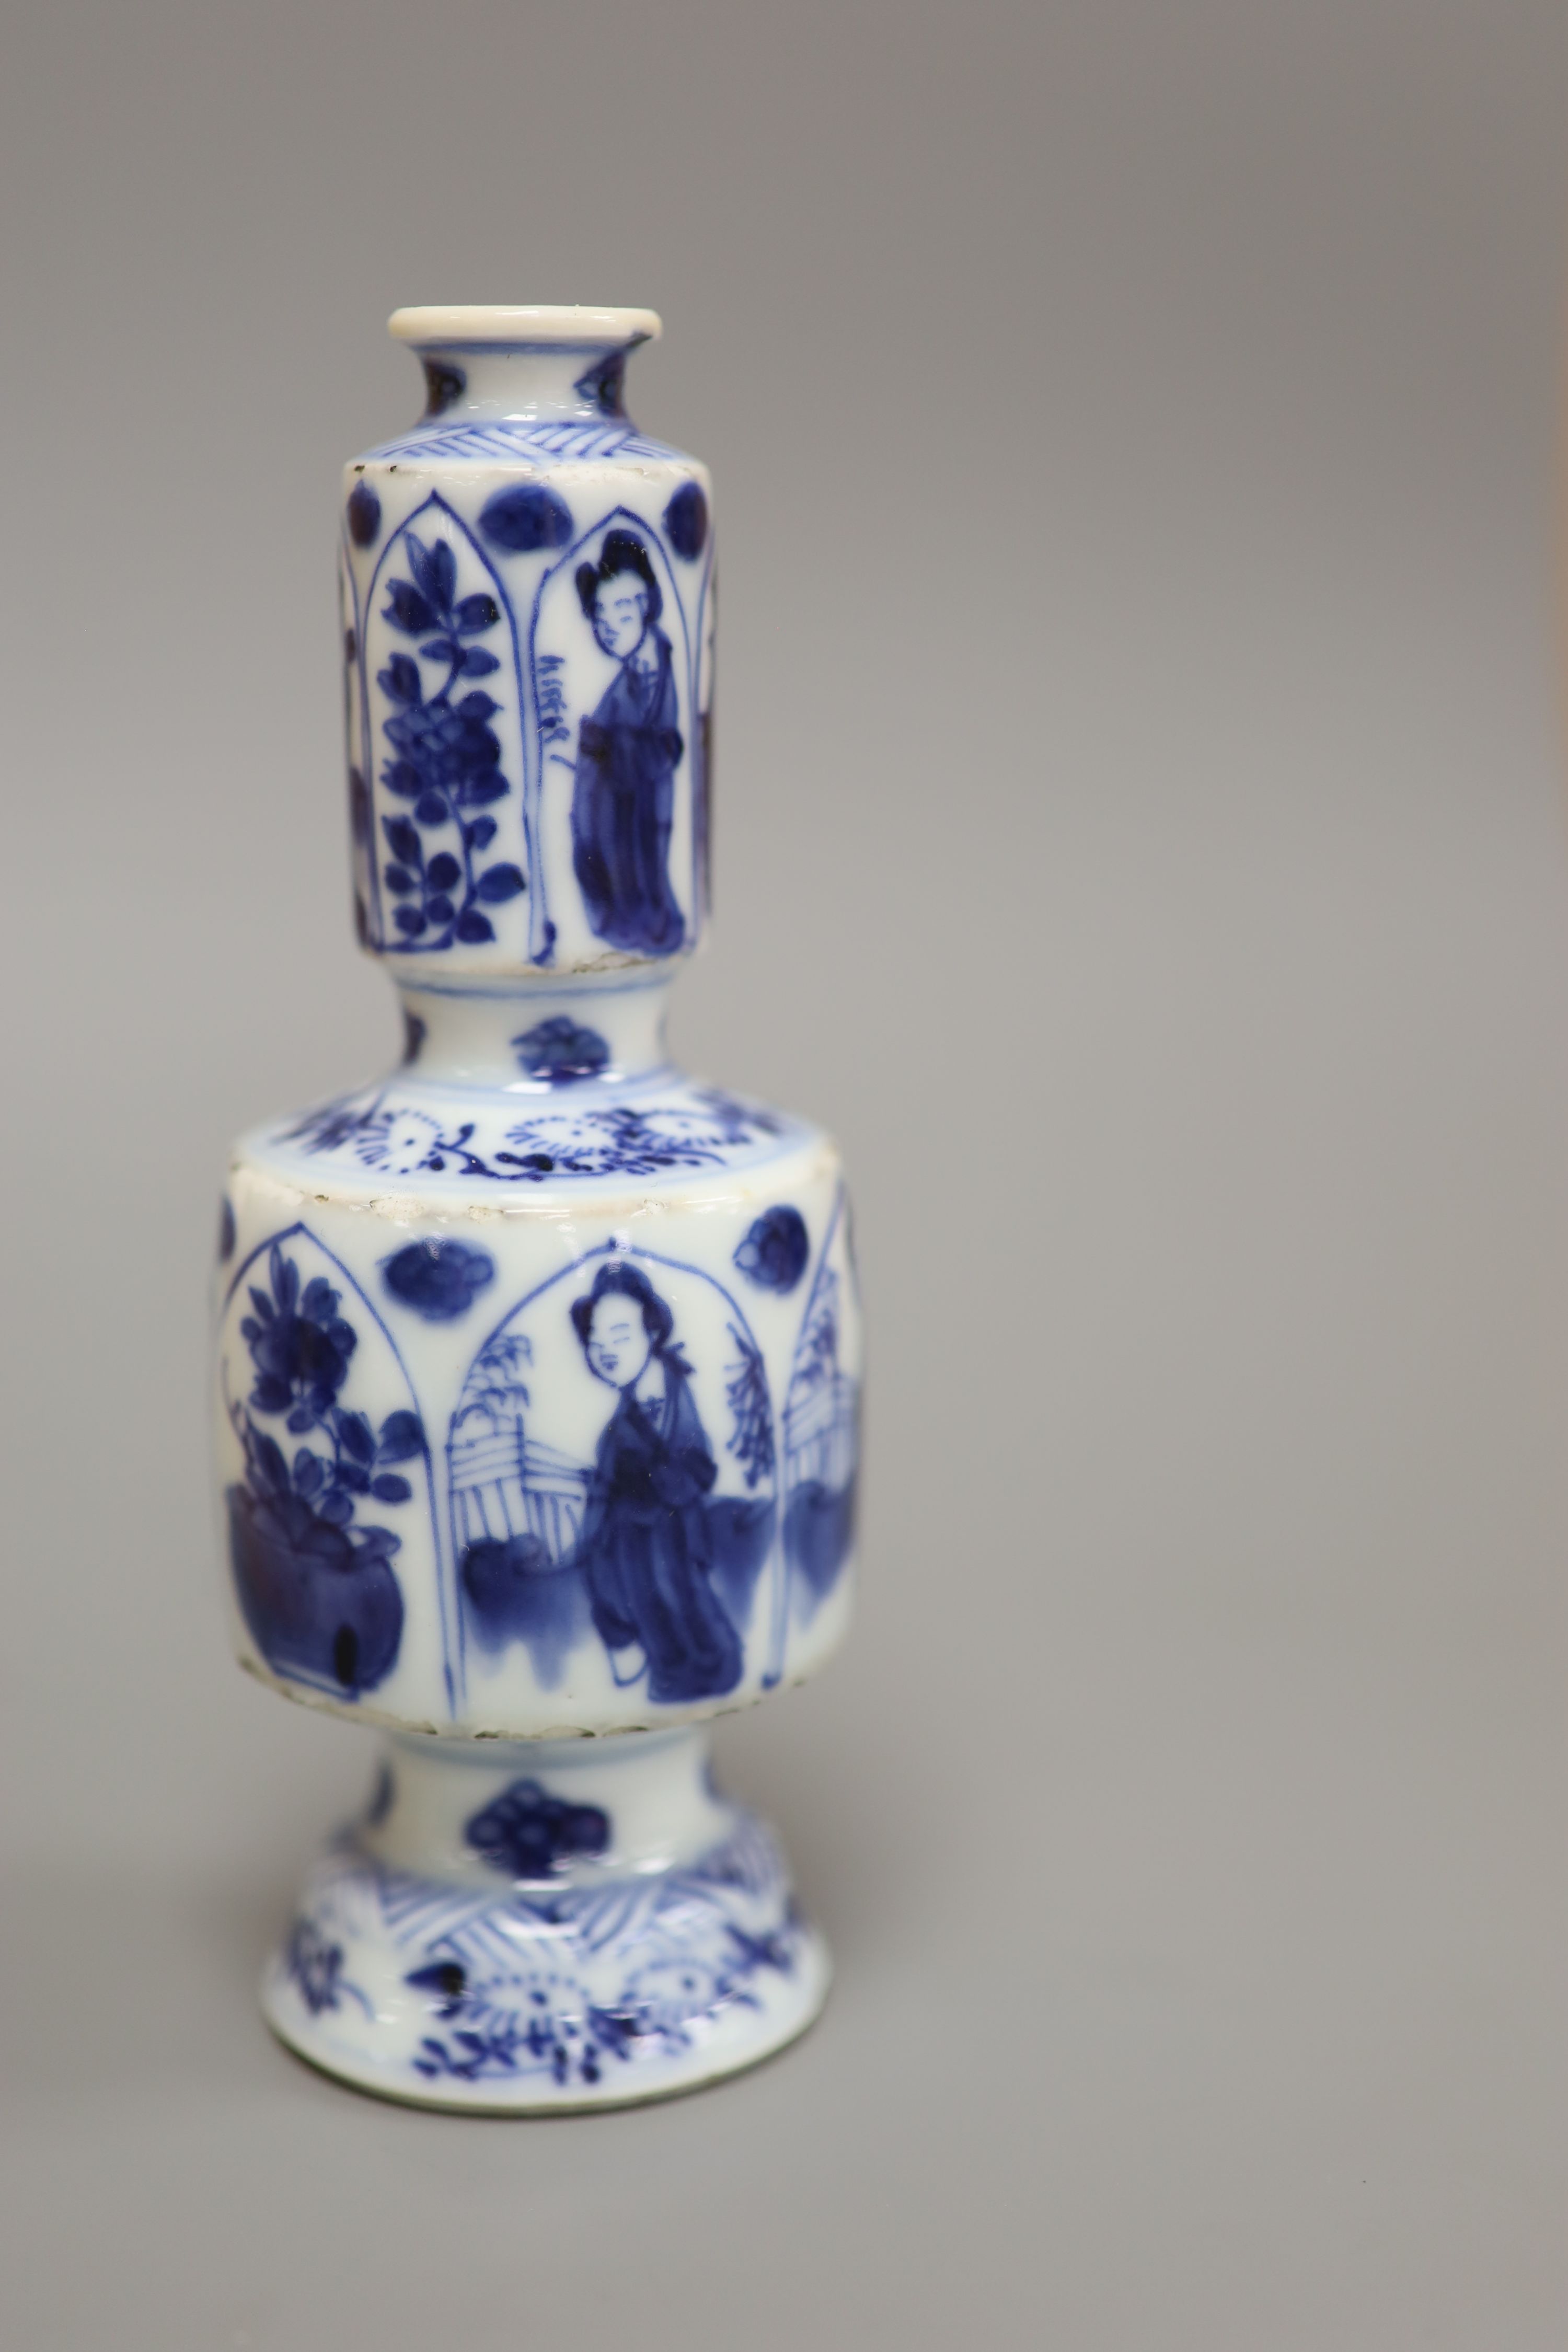 A Chinese Kangxi blue and white vase, ‘Jade’ mark to base, height 13cm - Image 2 of 7